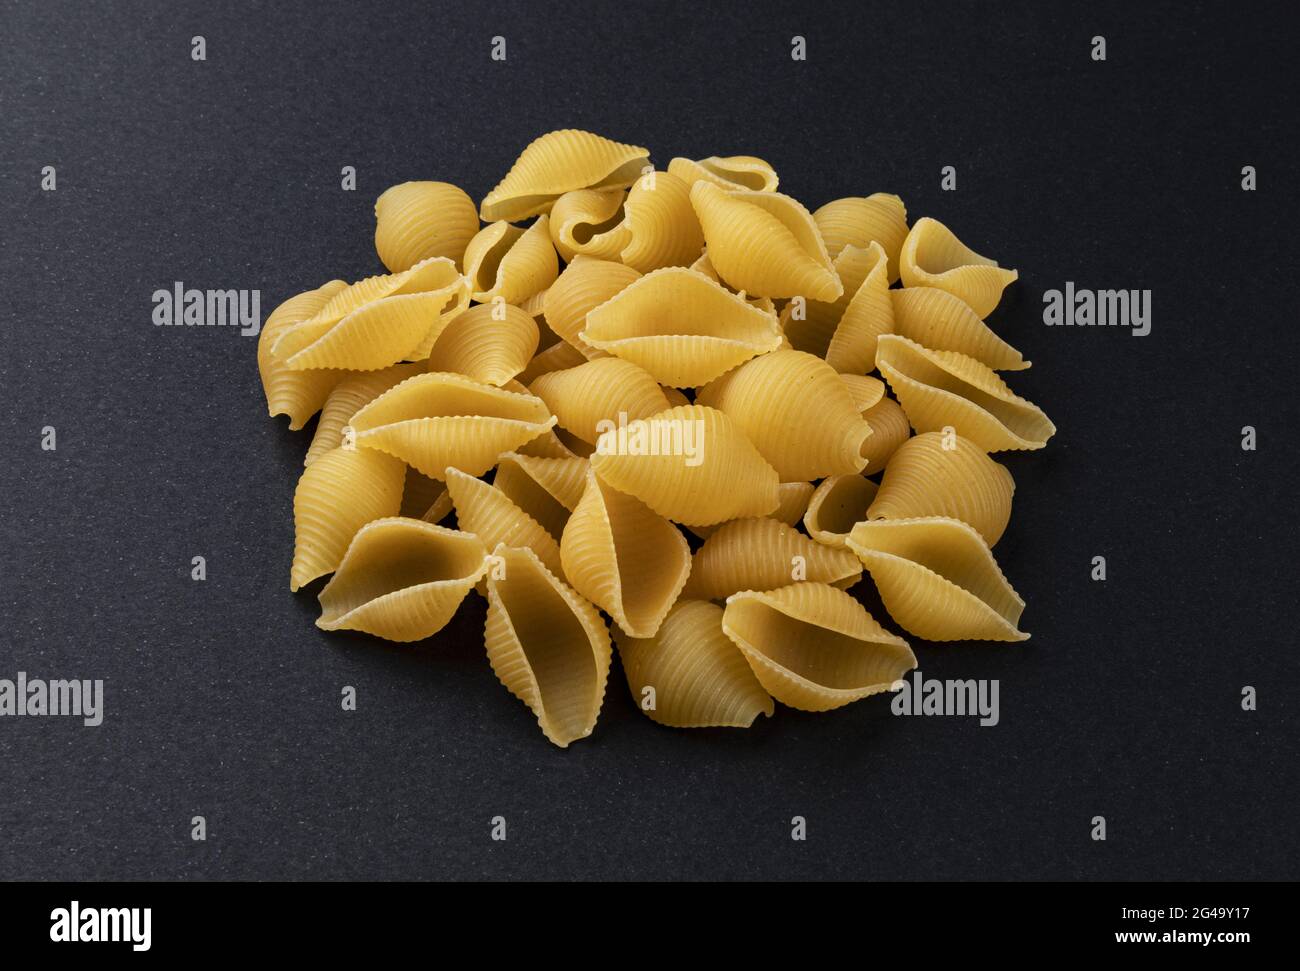 Conchiglie rigate. Raw striped shell pasta on black background Stock Photo